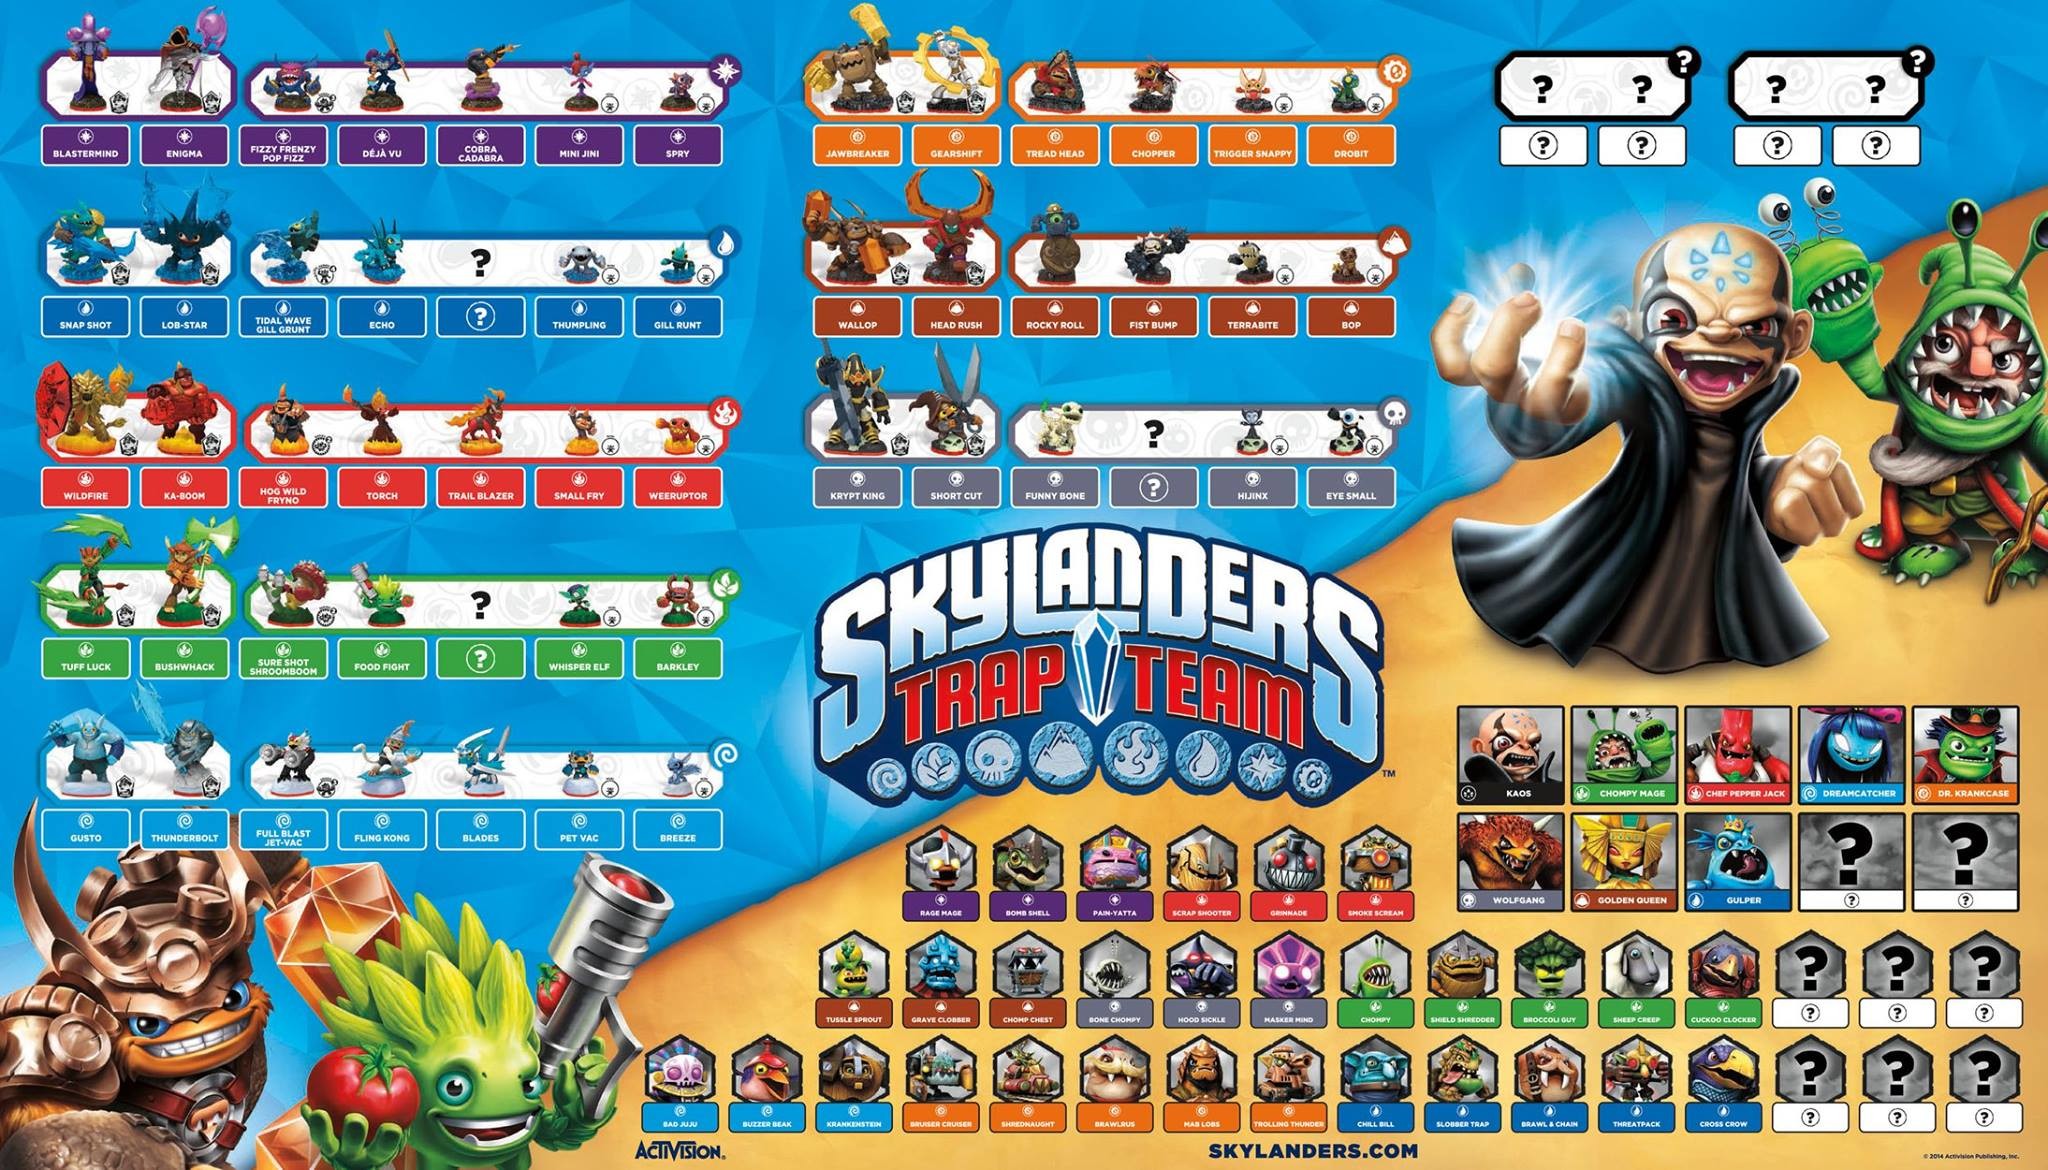 2048x1170 Skylanders Trap Team to introduce 2 new elements Wii U Forum Page 